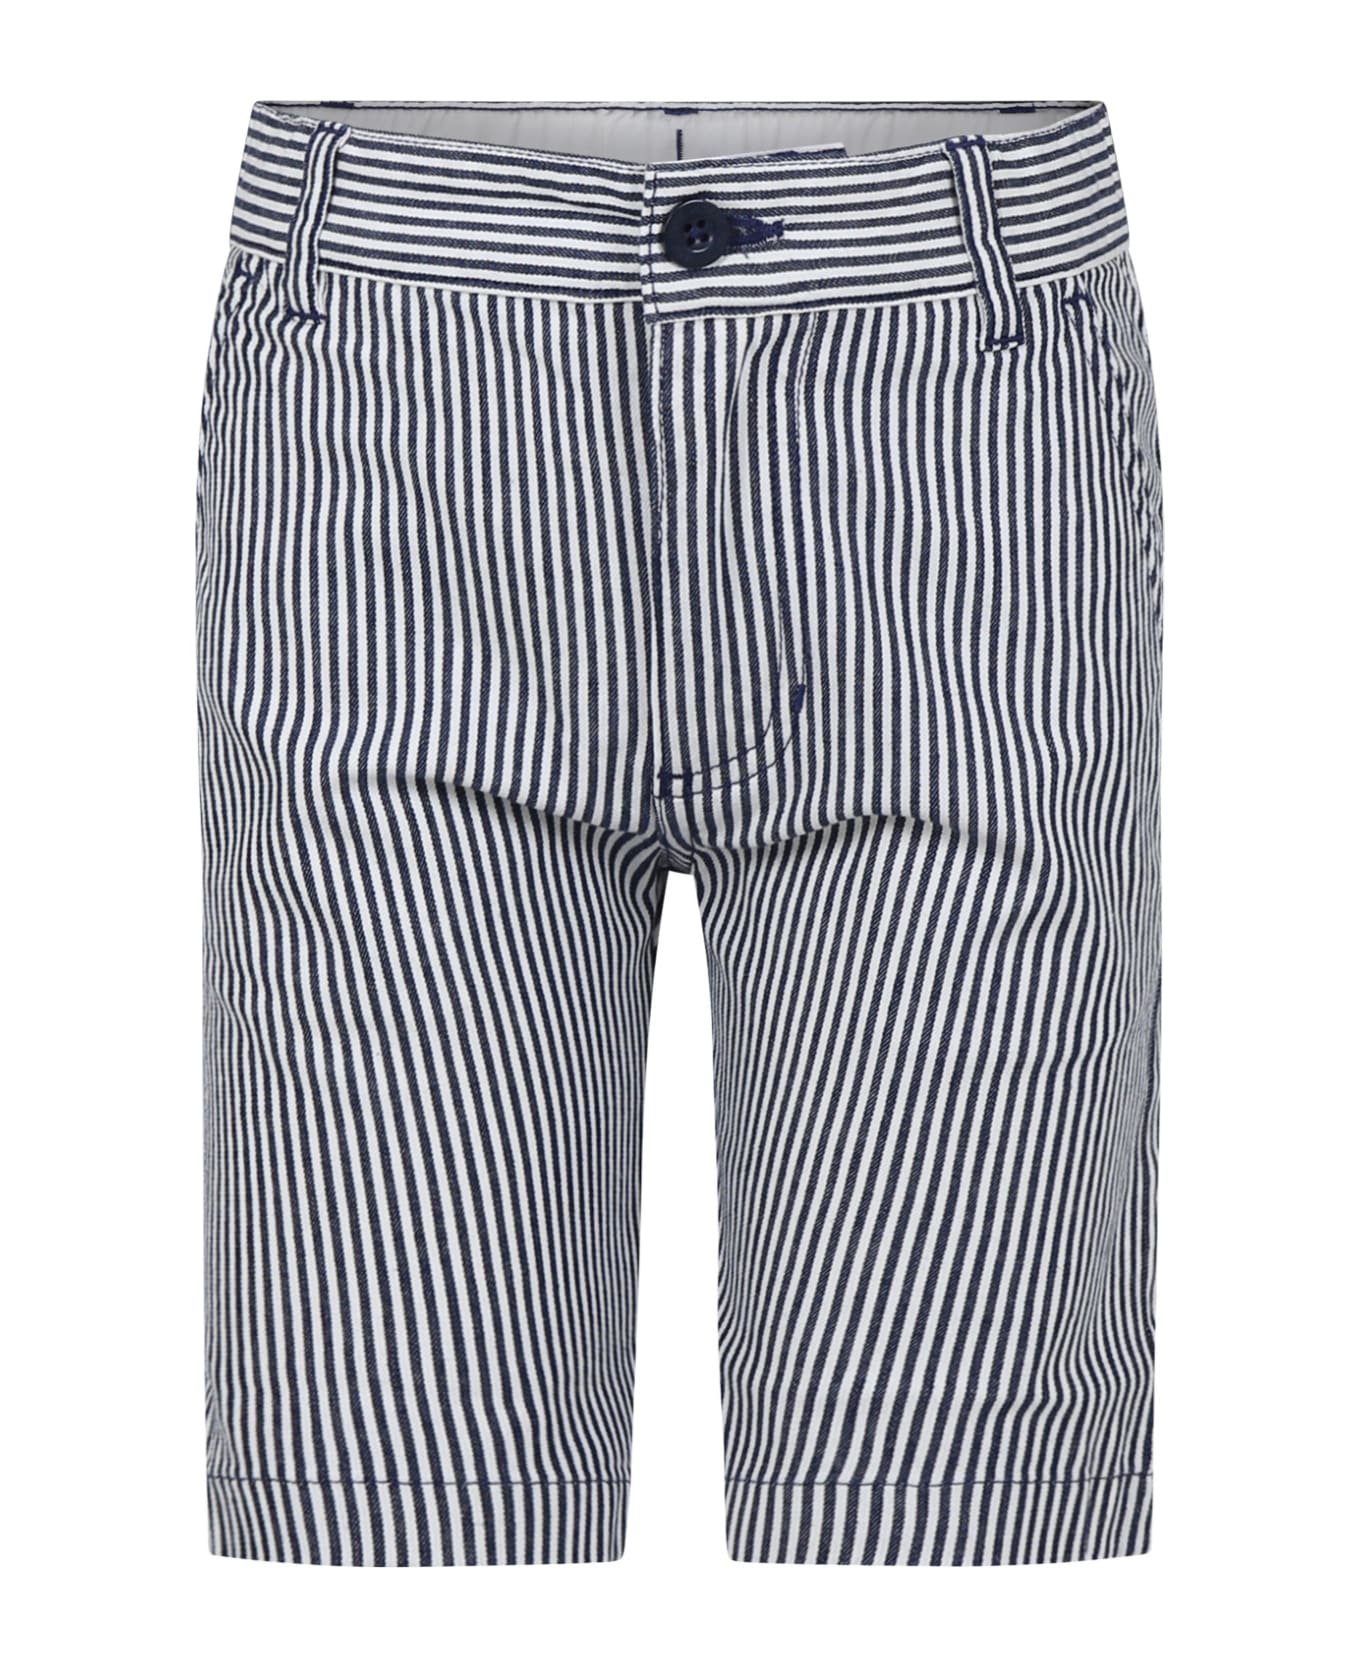 Petit Bateau Blue Shorts For Boy With Stripes - Blue